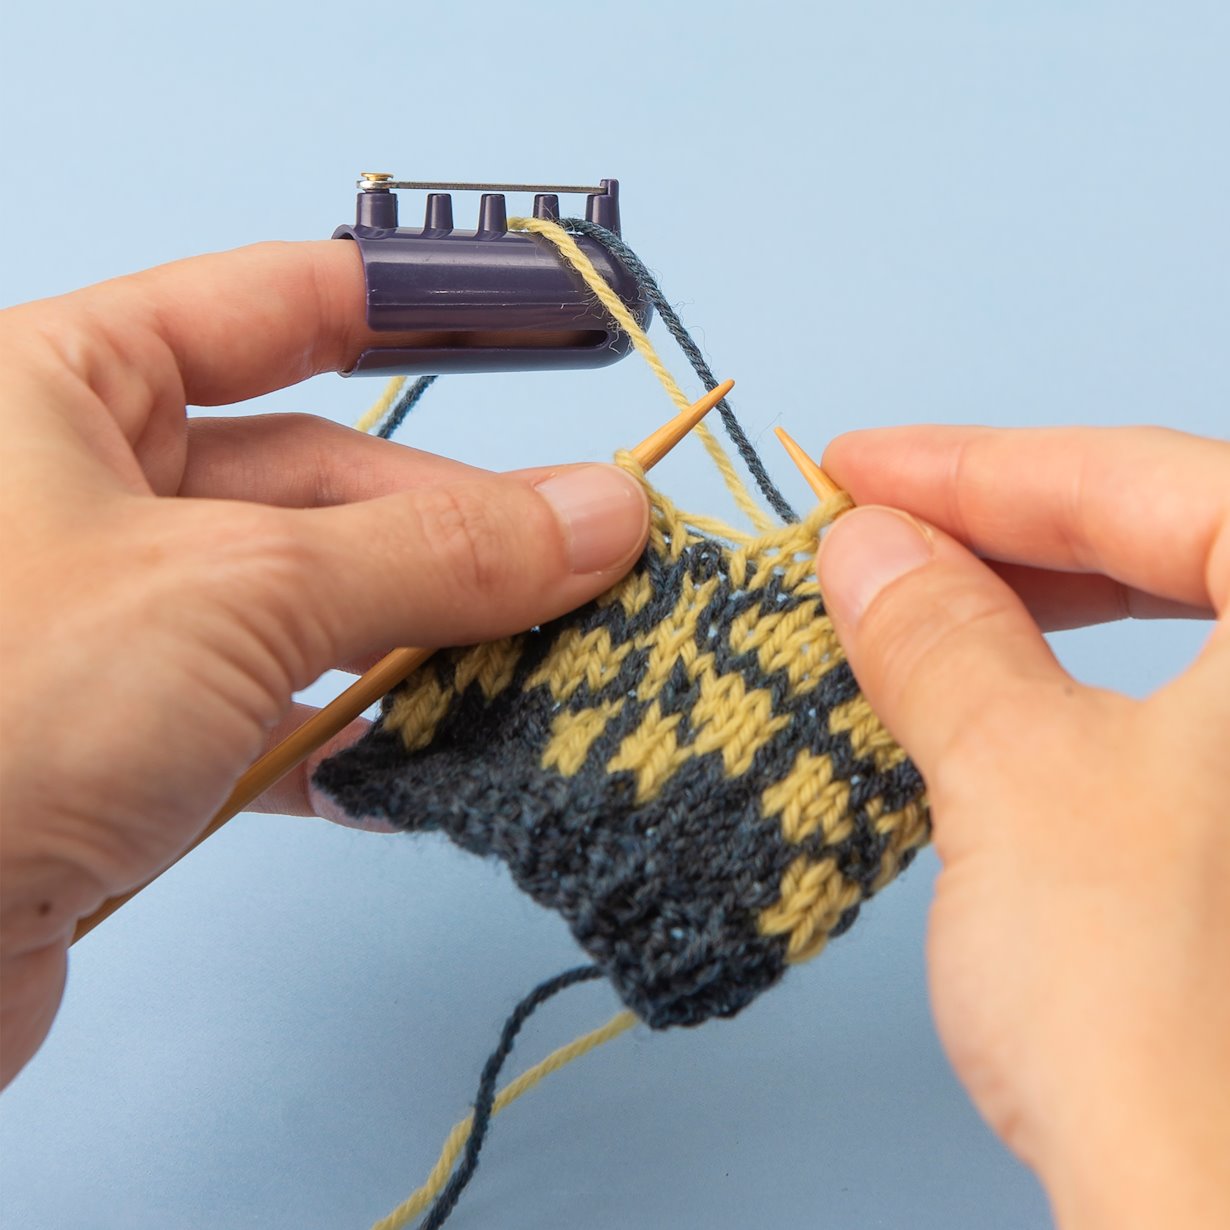 Prym Knitting Thimble